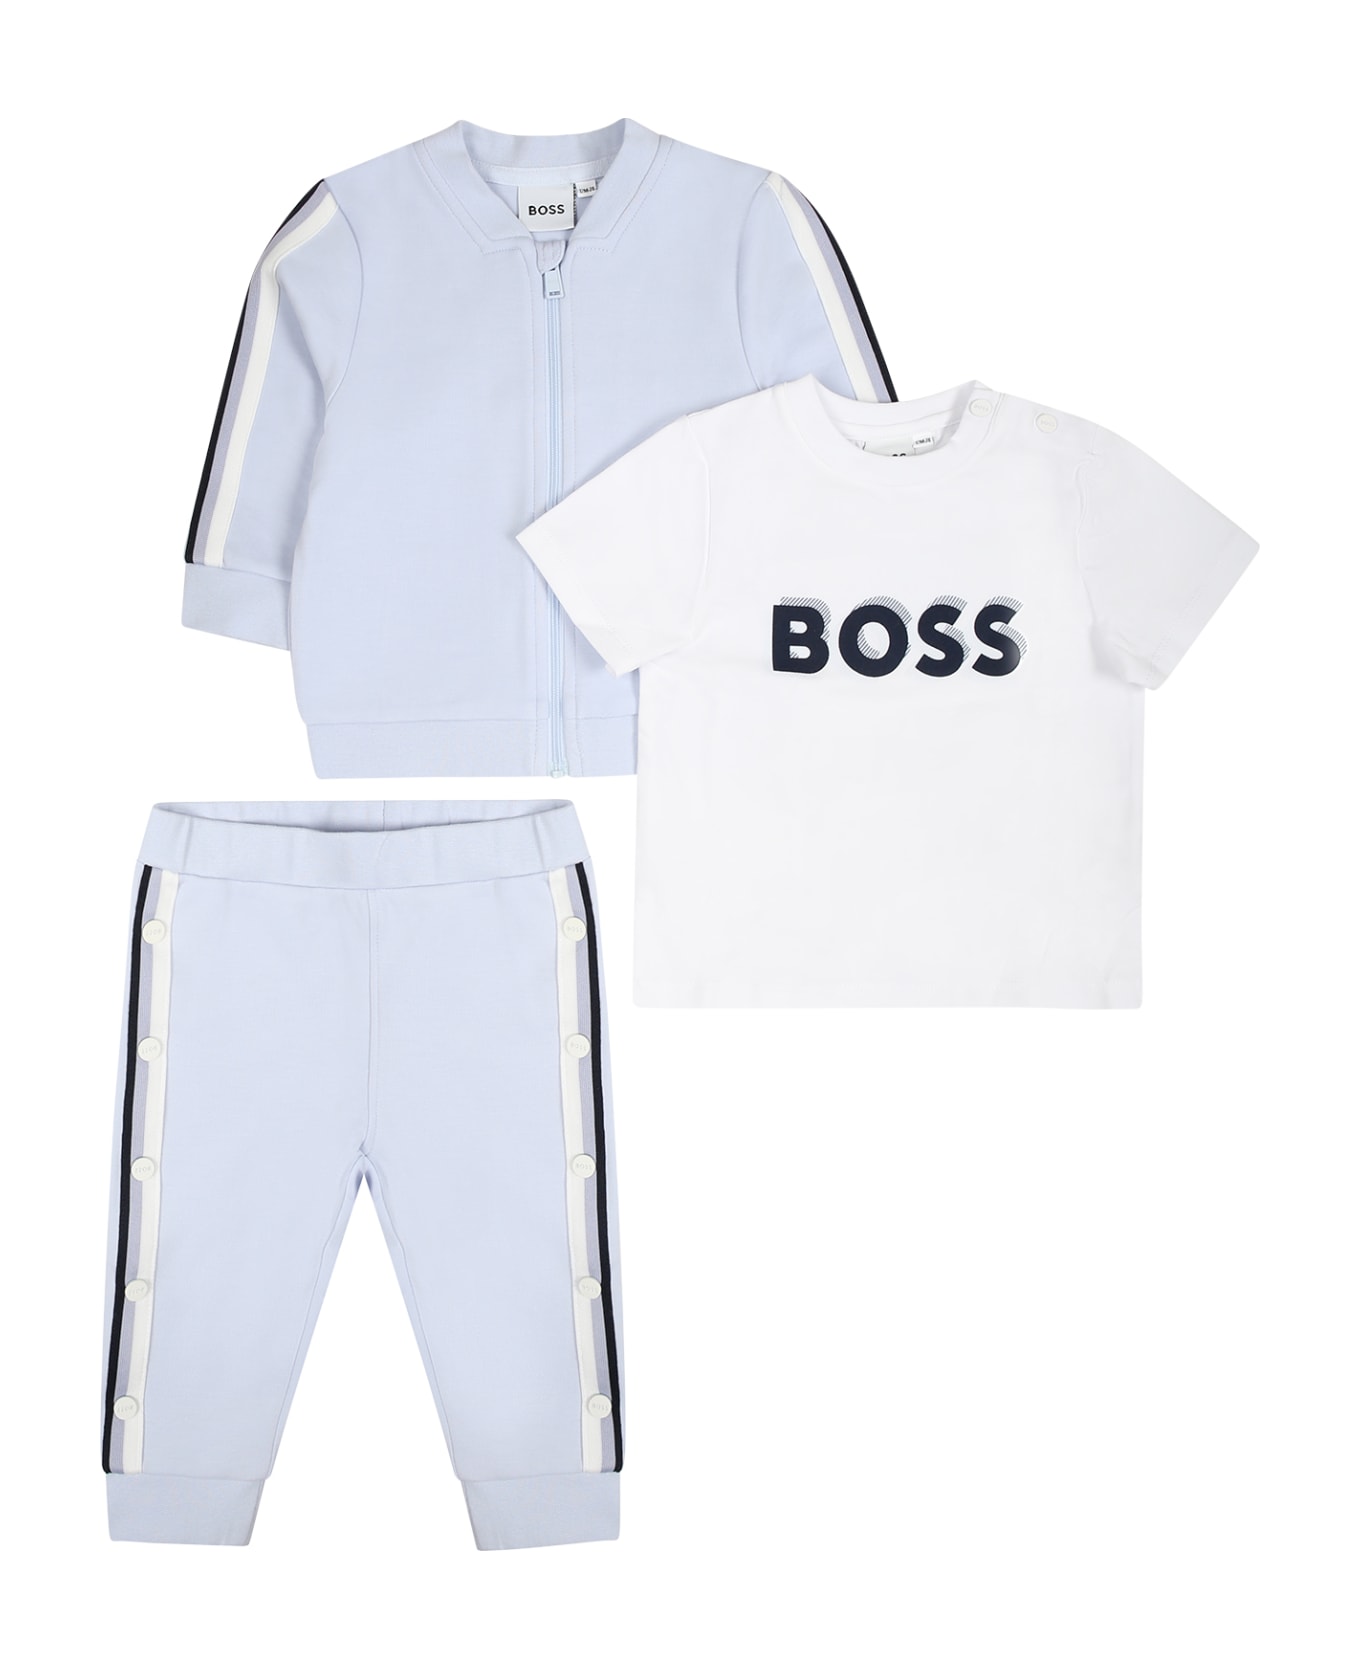 Hugo Boss Light Blue Sport Suit Set For Baby Boy - Light Blue